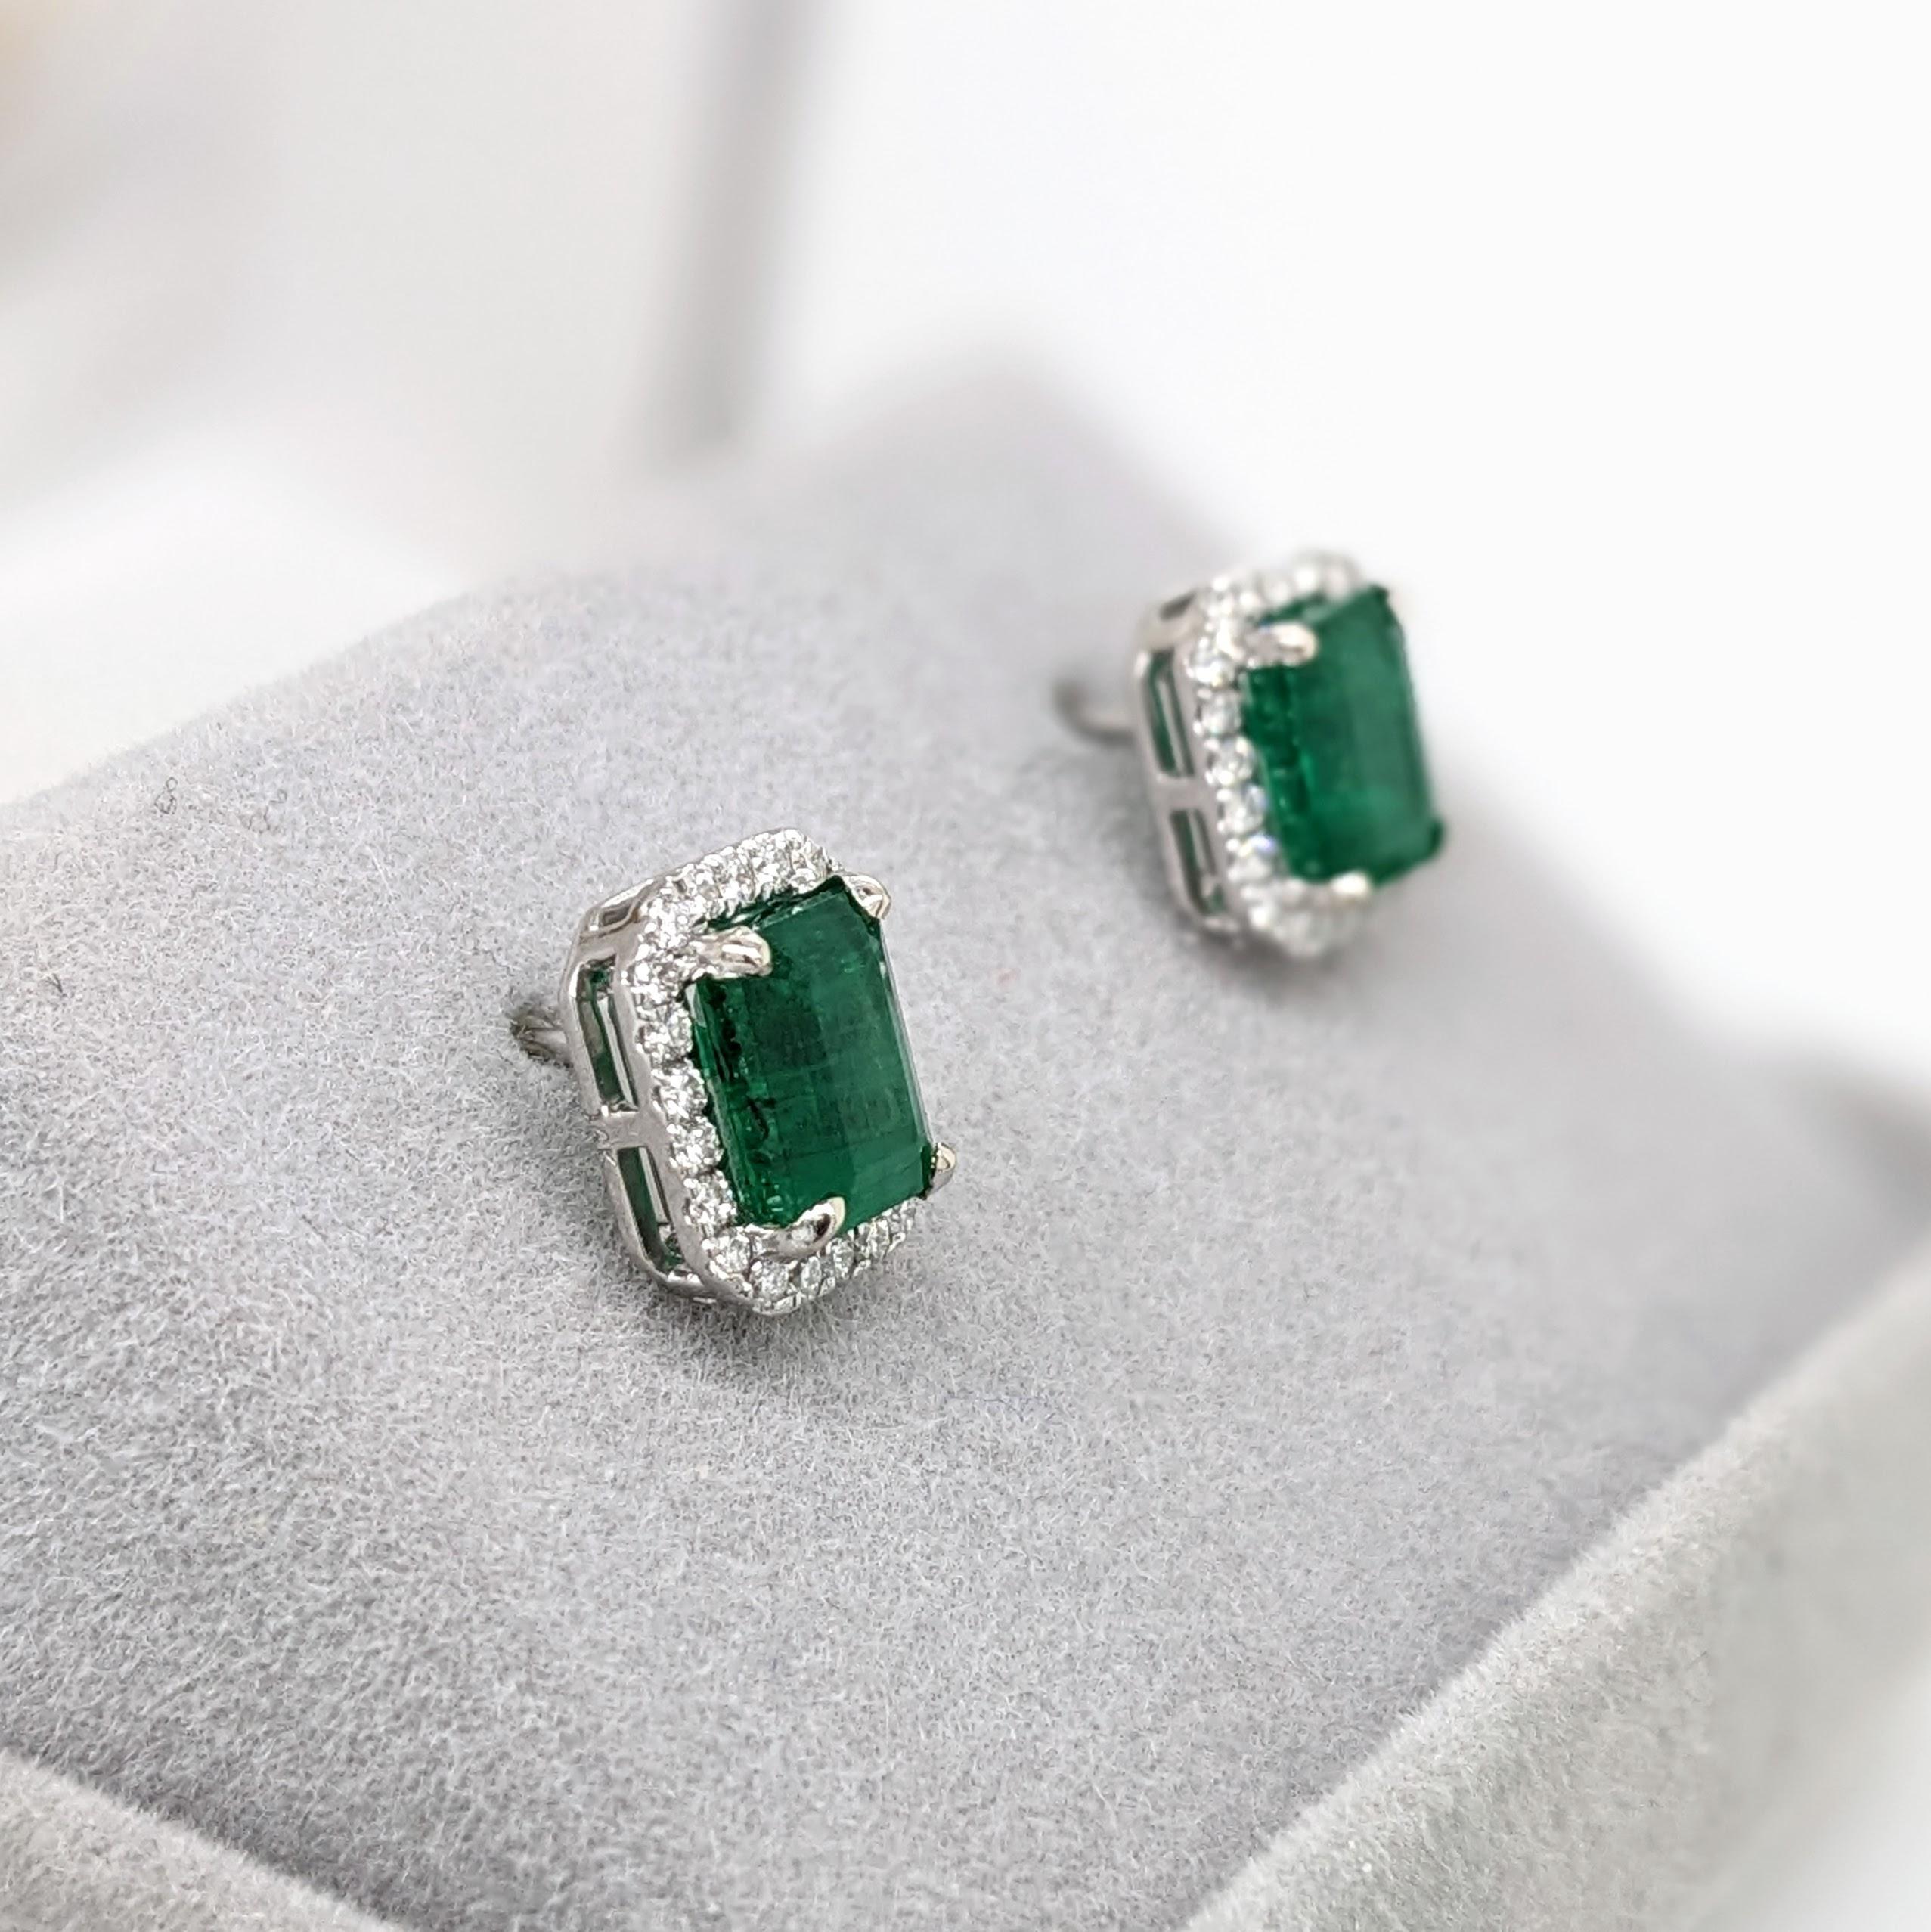 2.3ct Zambian Emerald Stud Earrings w Natural Diamond Halo in Solid 14K Gold 7x5 5